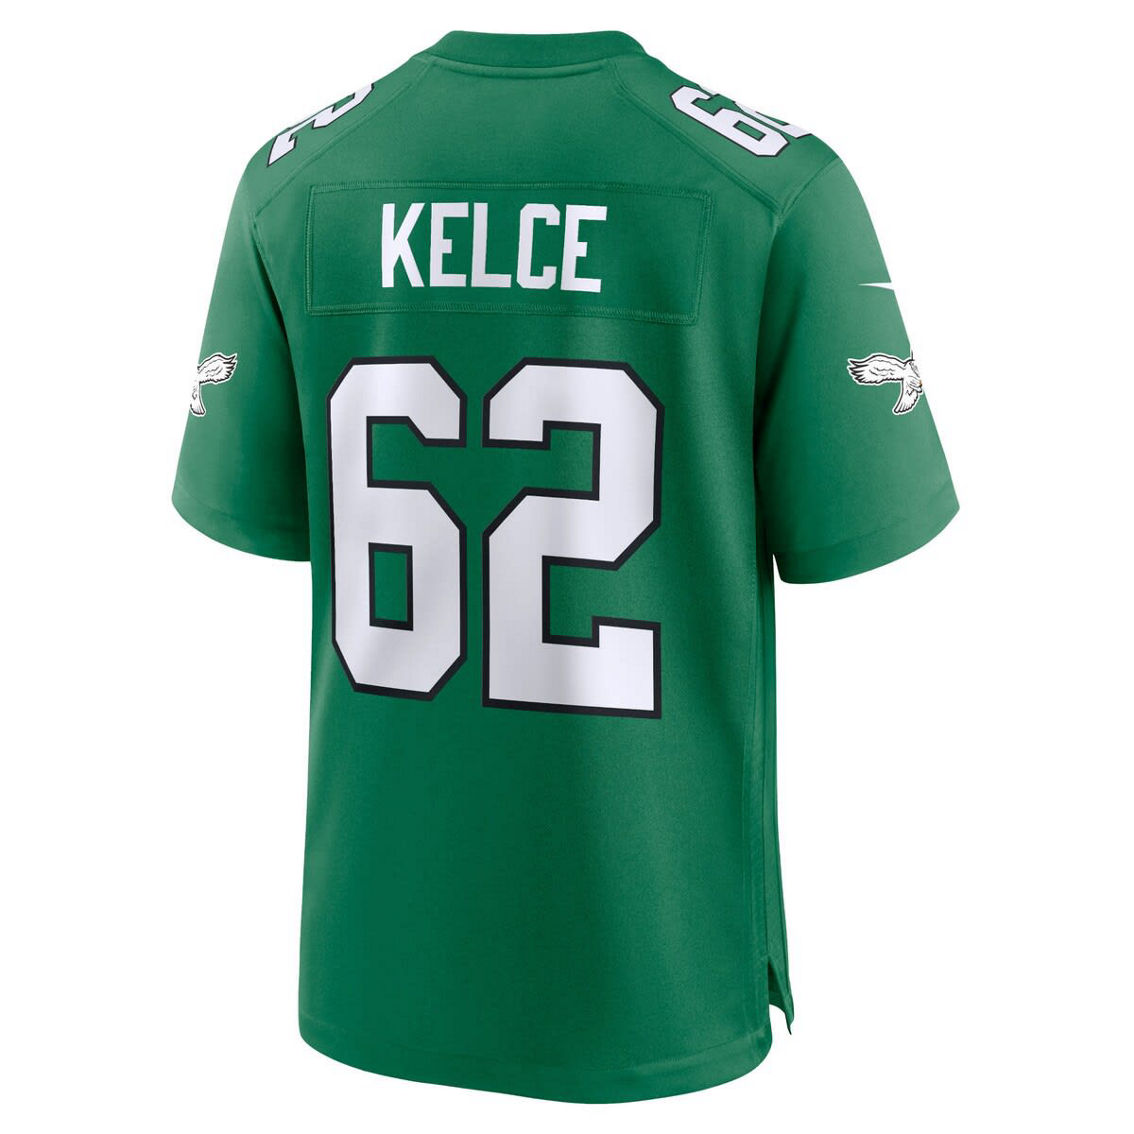 Nike Youth Jason Kelce Kelly Green Philadelphia Eagles Game Jersey - Image 4 of 4